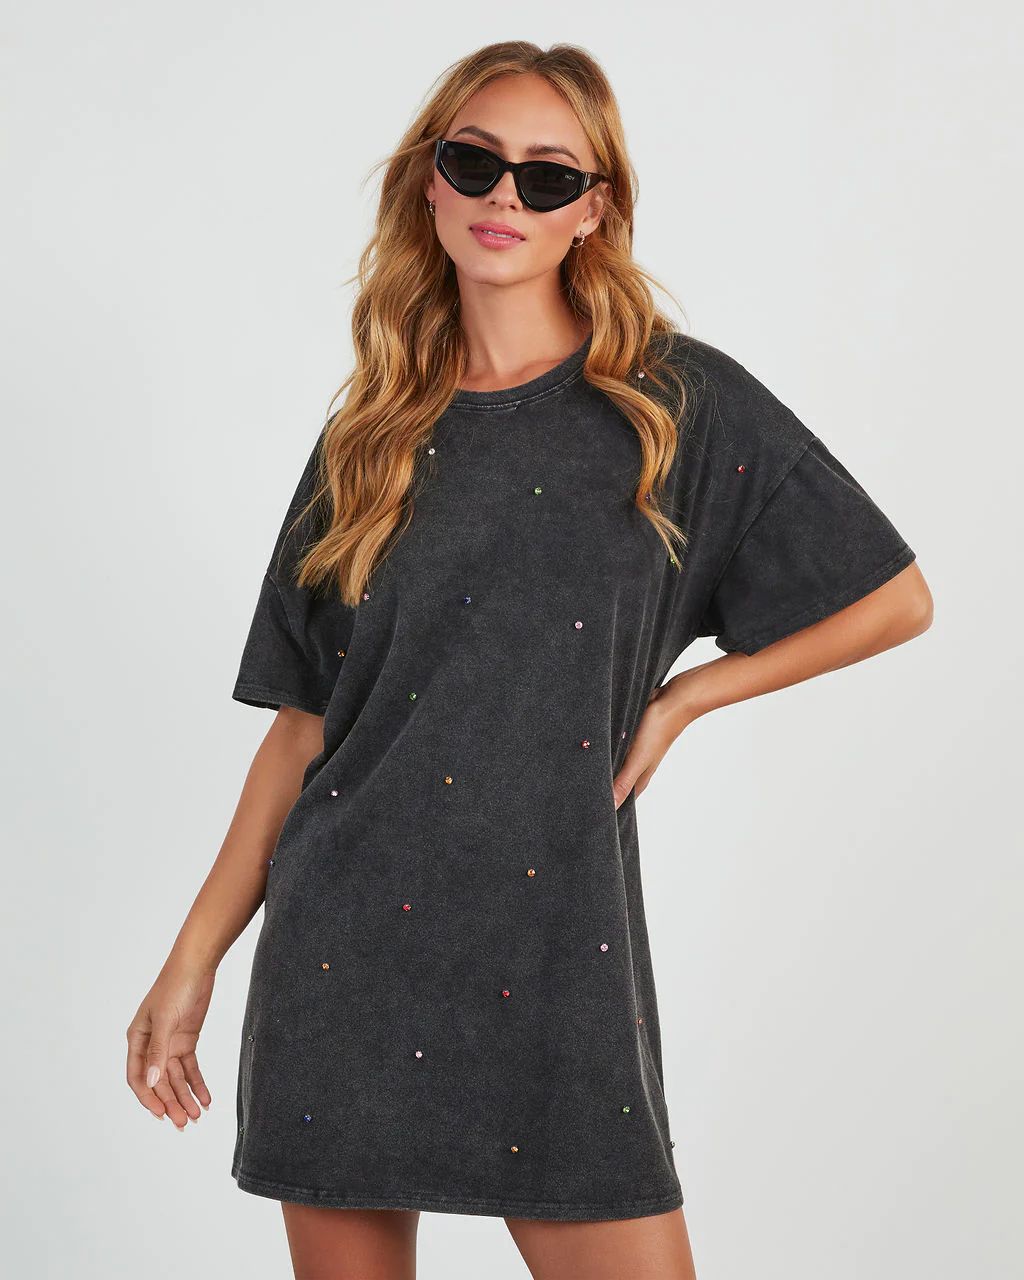 Analisa Embellished T-Shirt Dress | VICI Collection